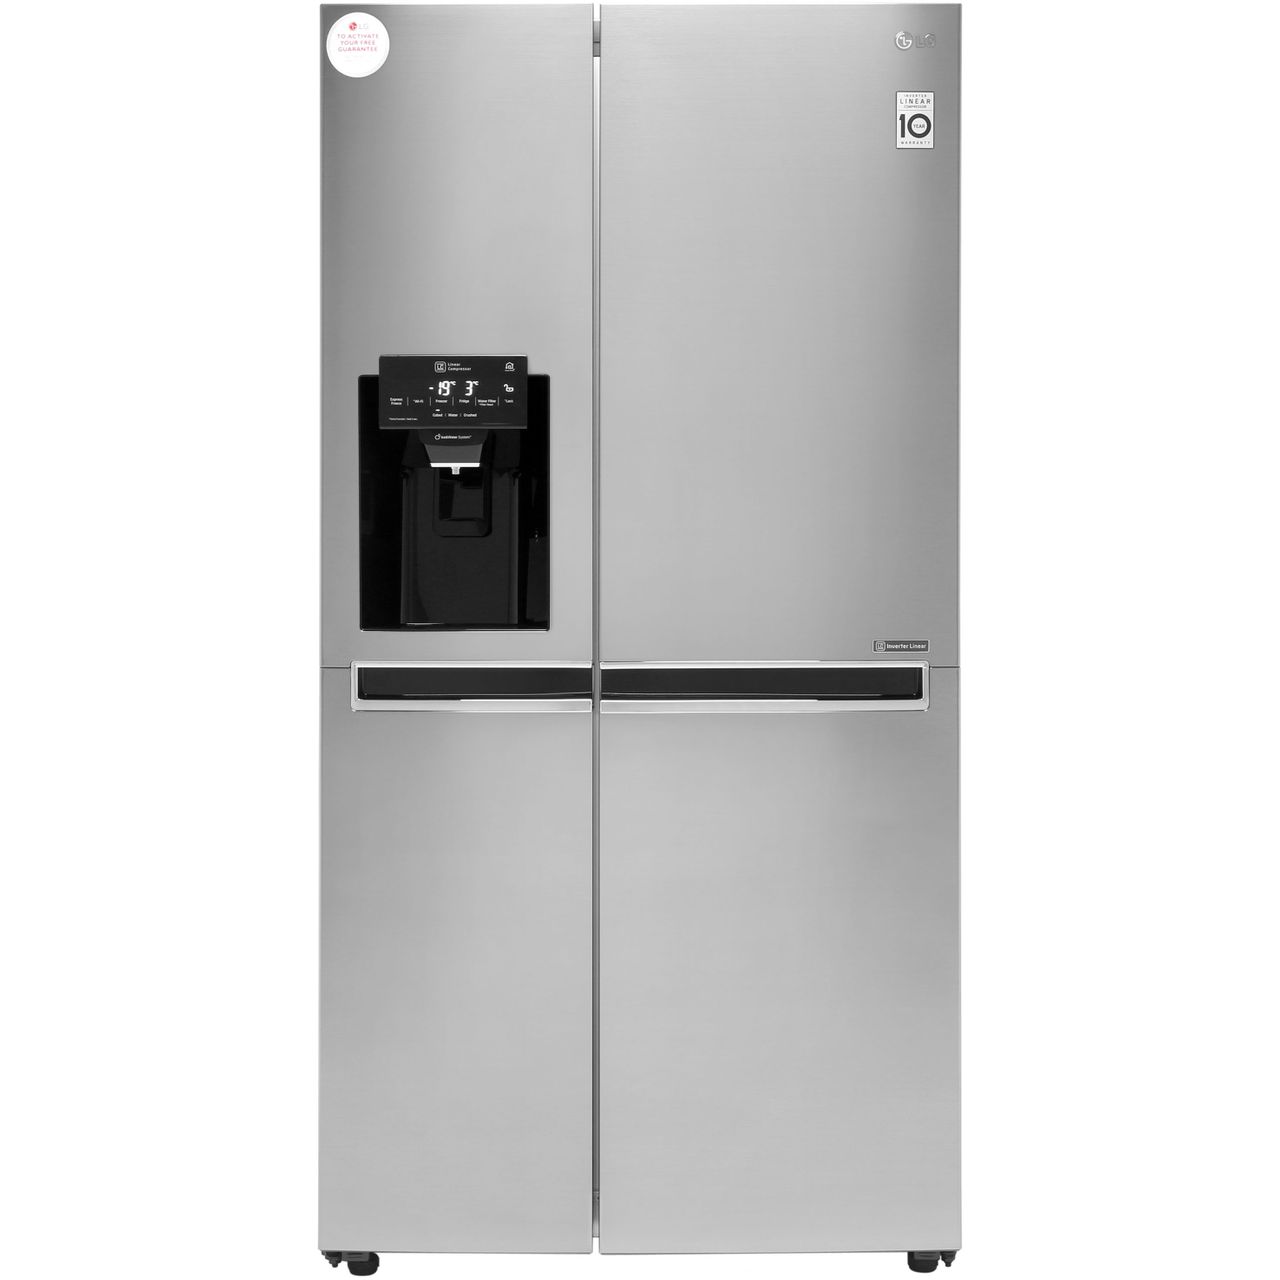 34+ Lg inverter linear refrigerator wifi setup ideas